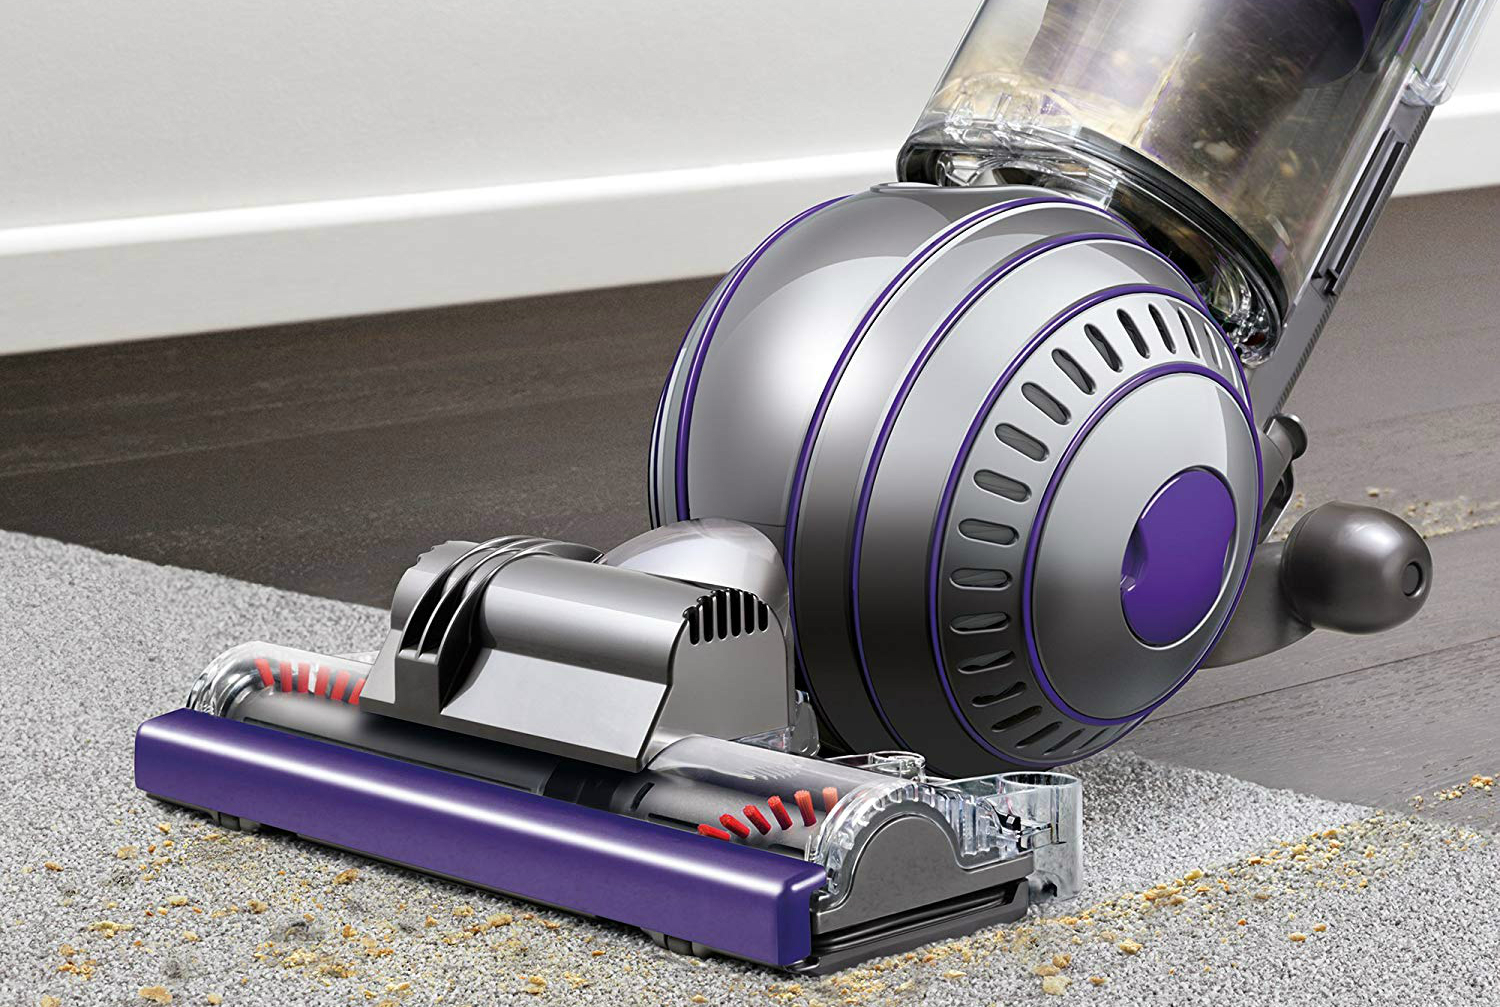 dyson vacuum cleaner deals on amazon upright ball animal 2 iron purple 3